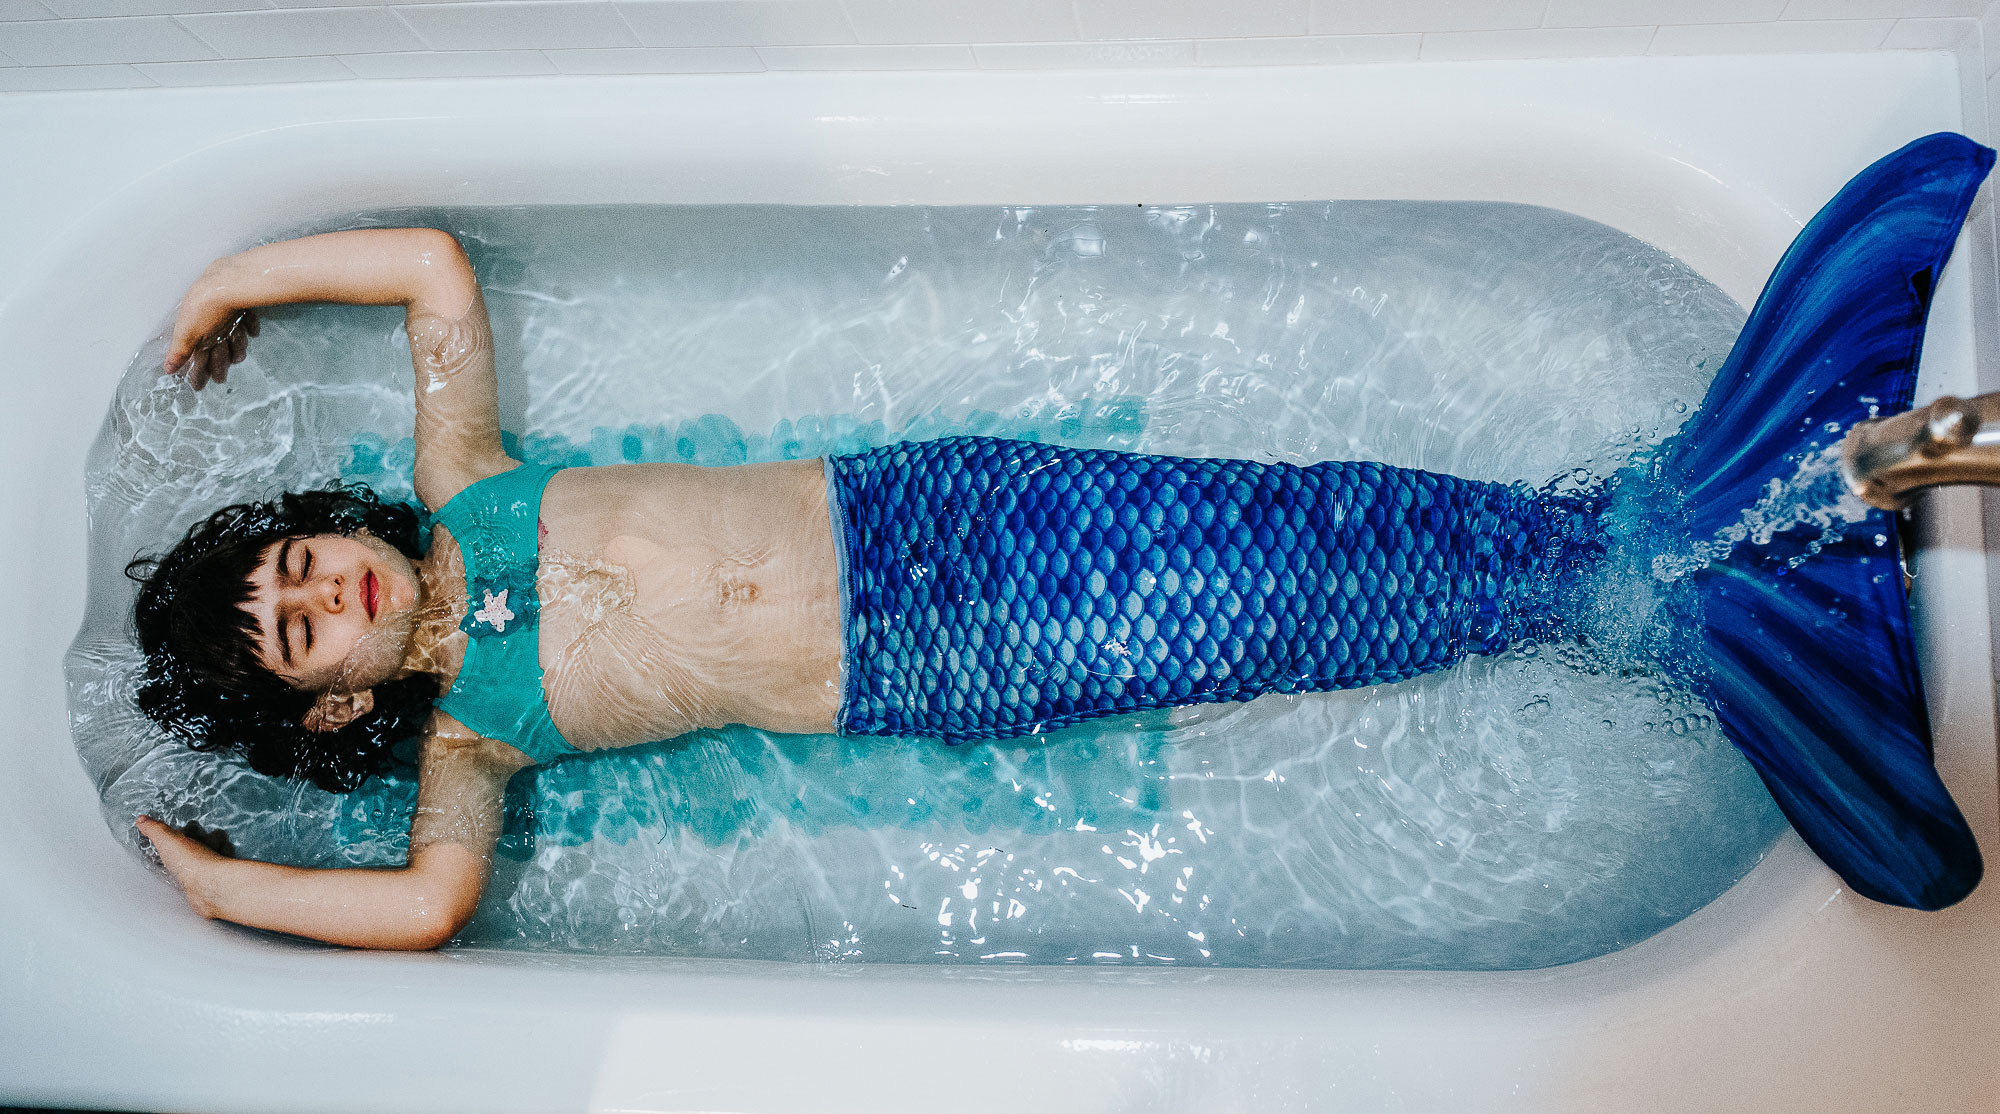 girl dressed up as a mermaid in the bath tub